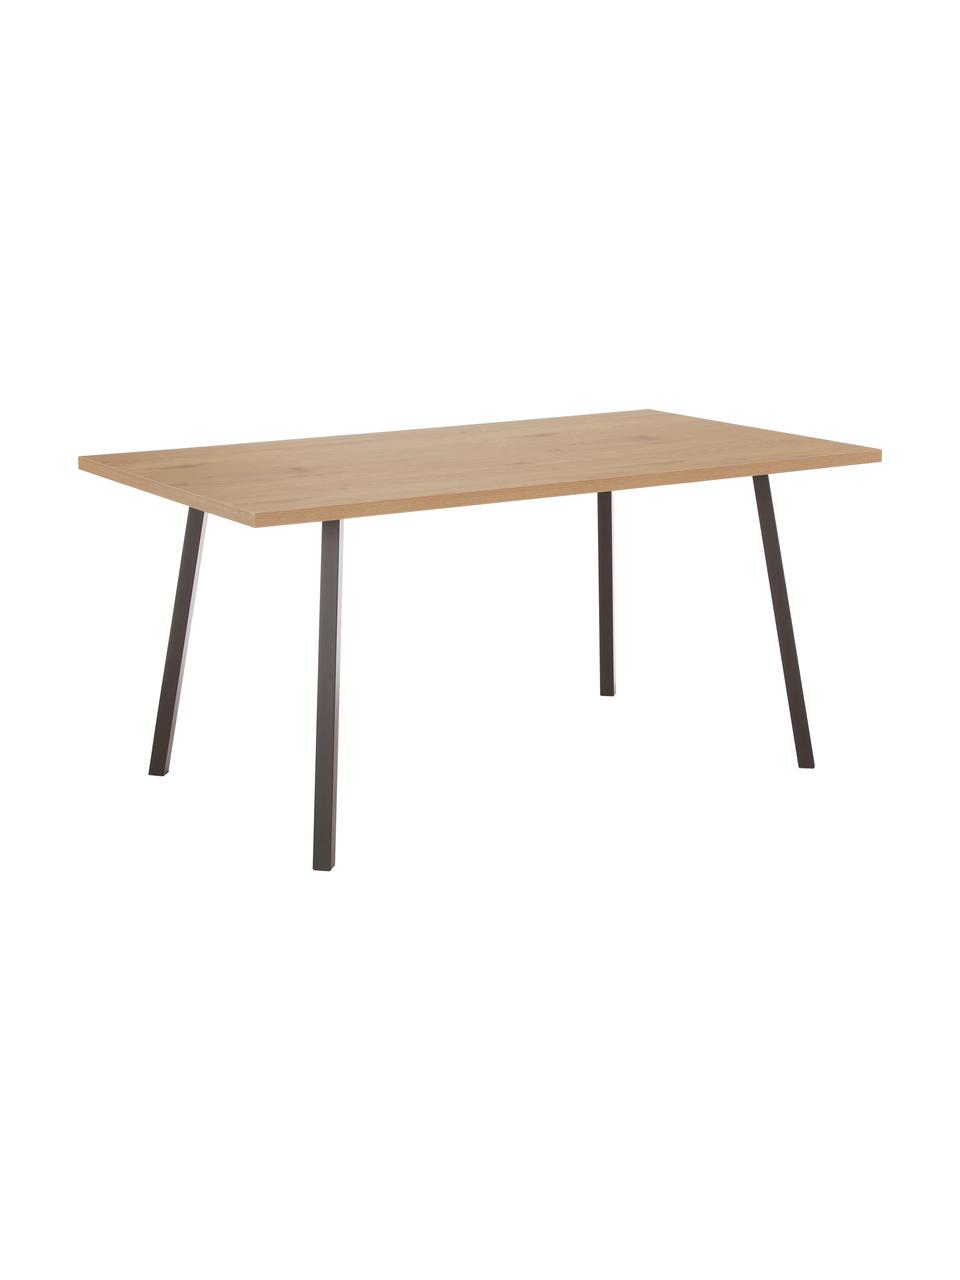 Jedálenský stôl s dubovou dyhou Cenny, Dubové drevo